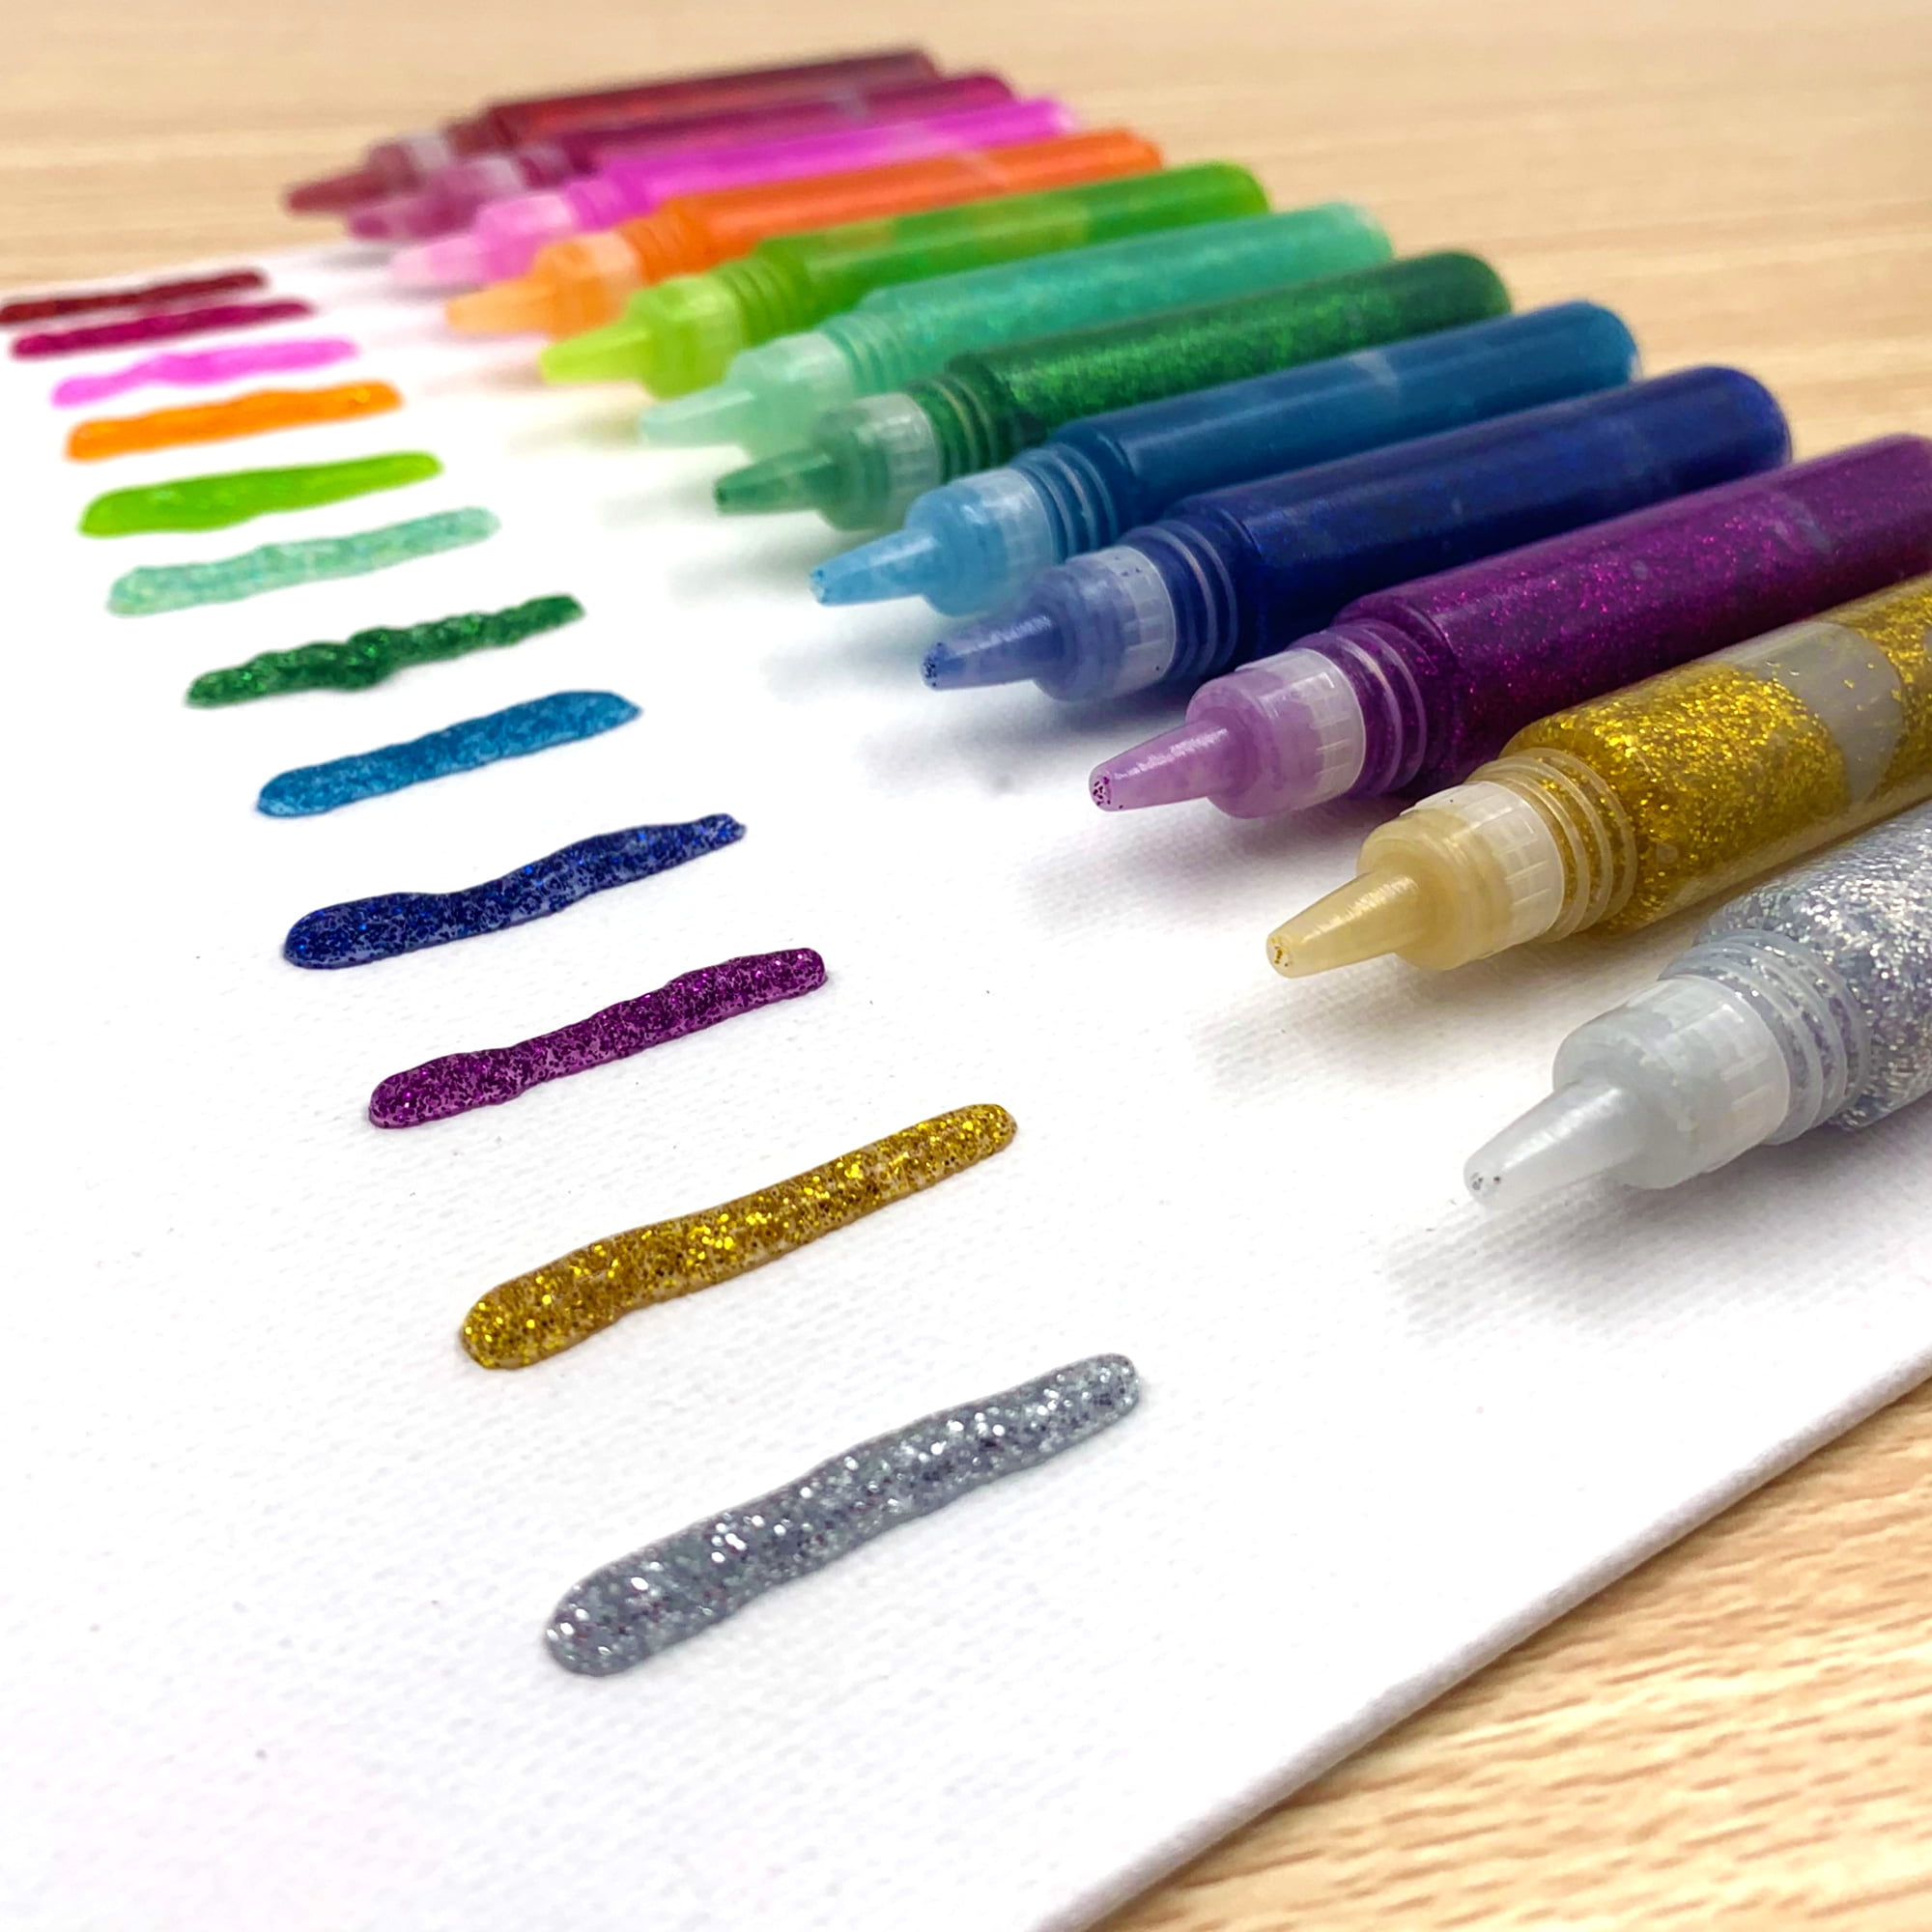 Glitter Glue Pens, Rainbow Swirl Colors, Kids Art & Crafts, Card Making  Supplies